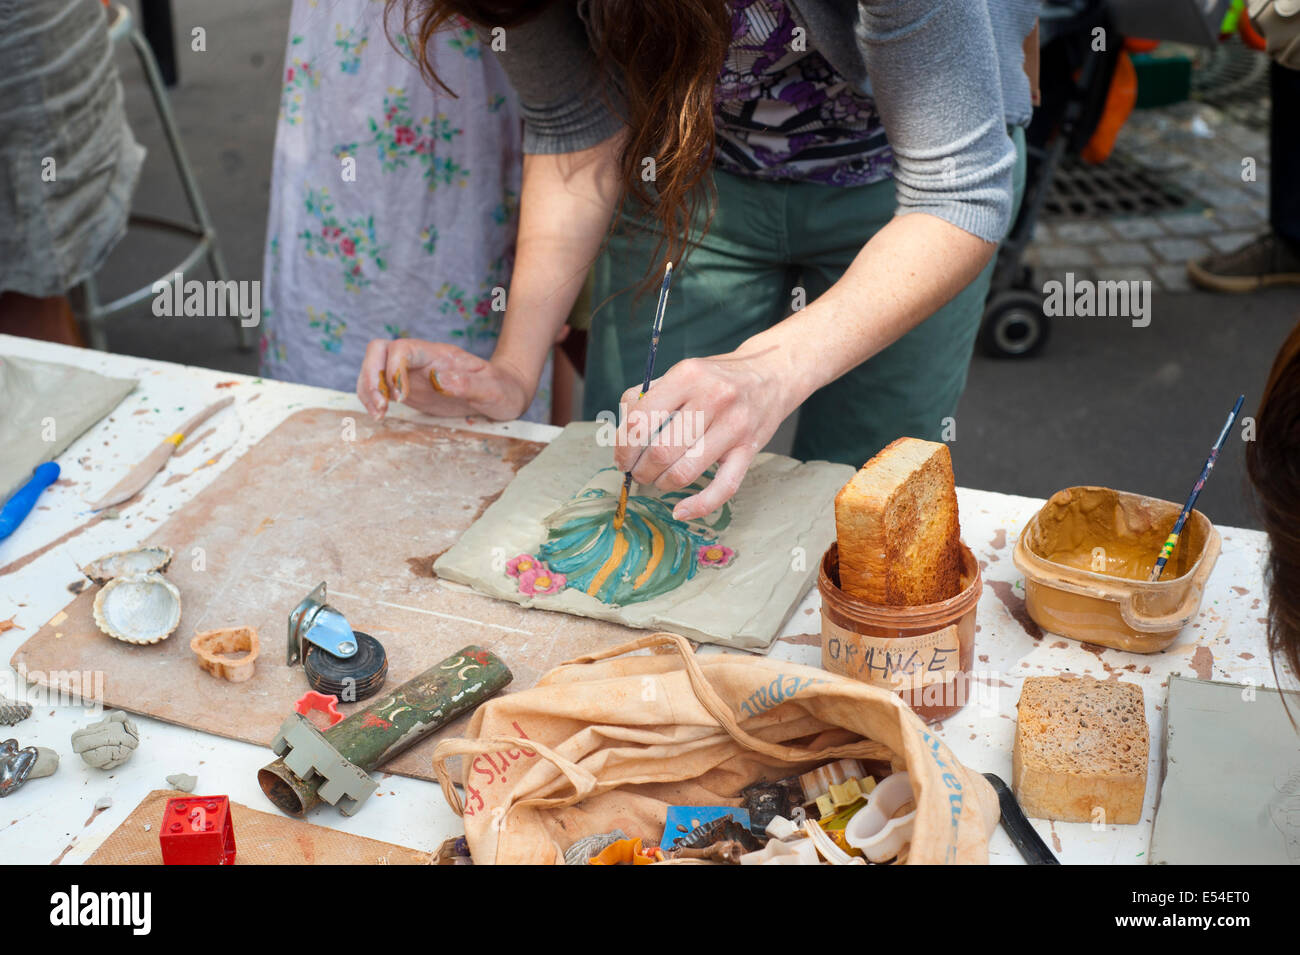 Paris France - Painting handicraft people Stock Photo